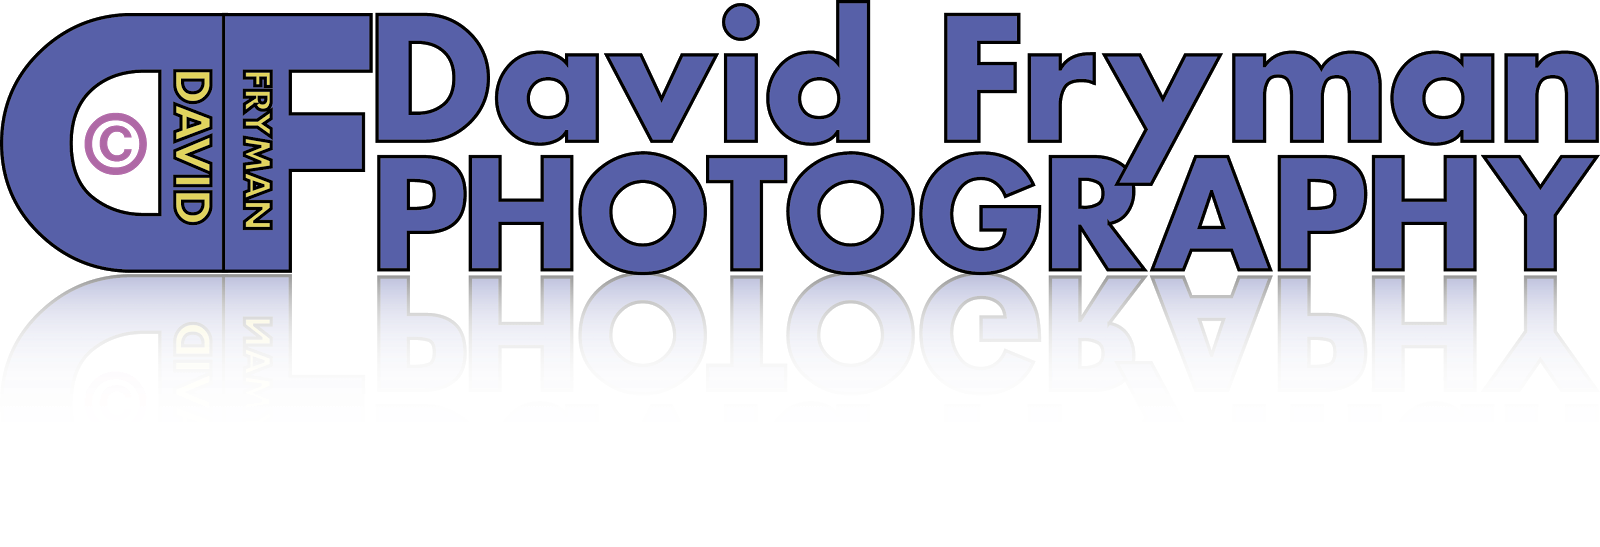 David Fryman Photography